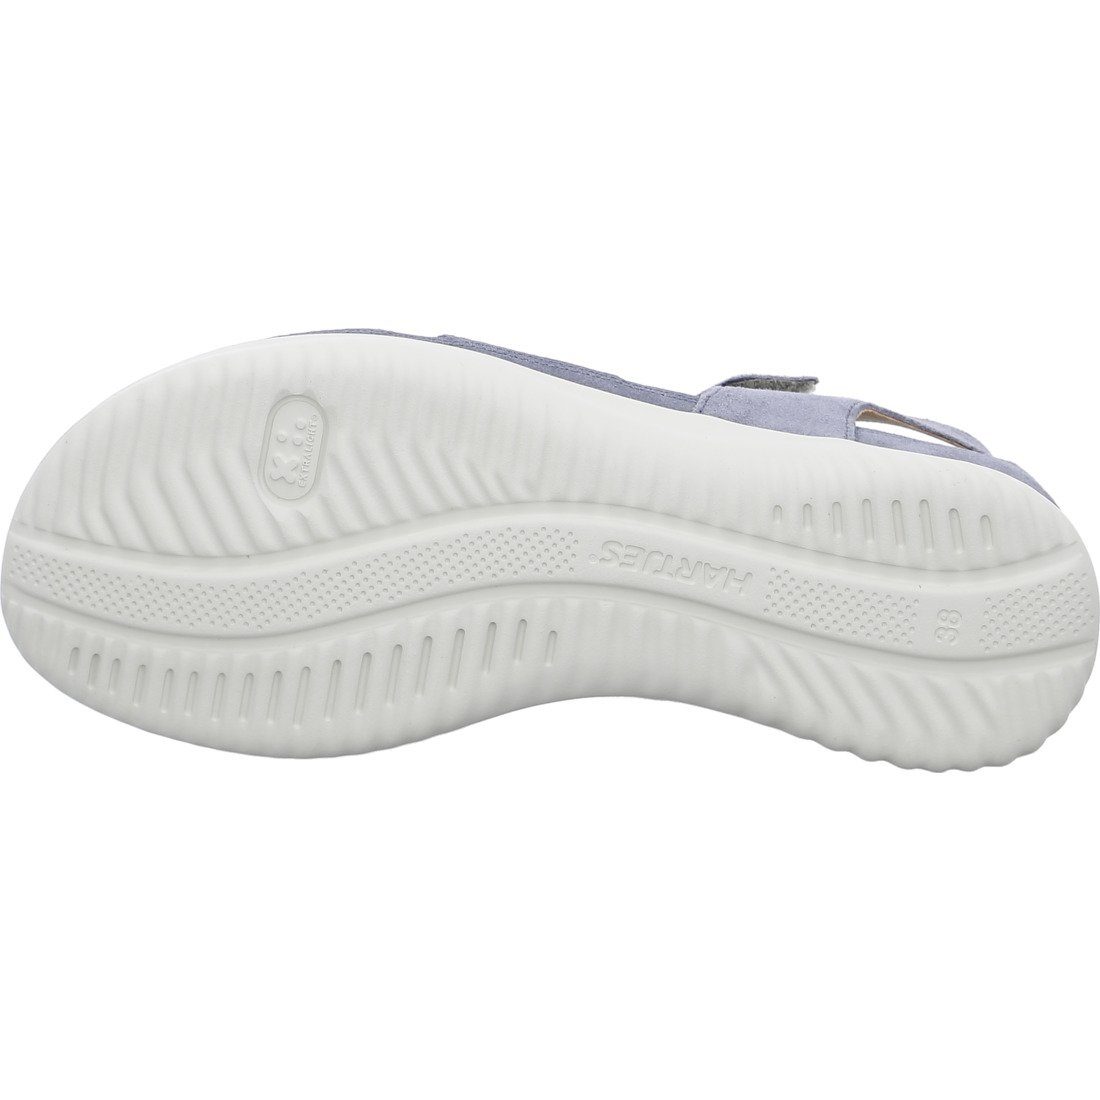 Hartjes Hartjes Sandalette blau Schuhe, 048735 Sandalette Velours - Breeze